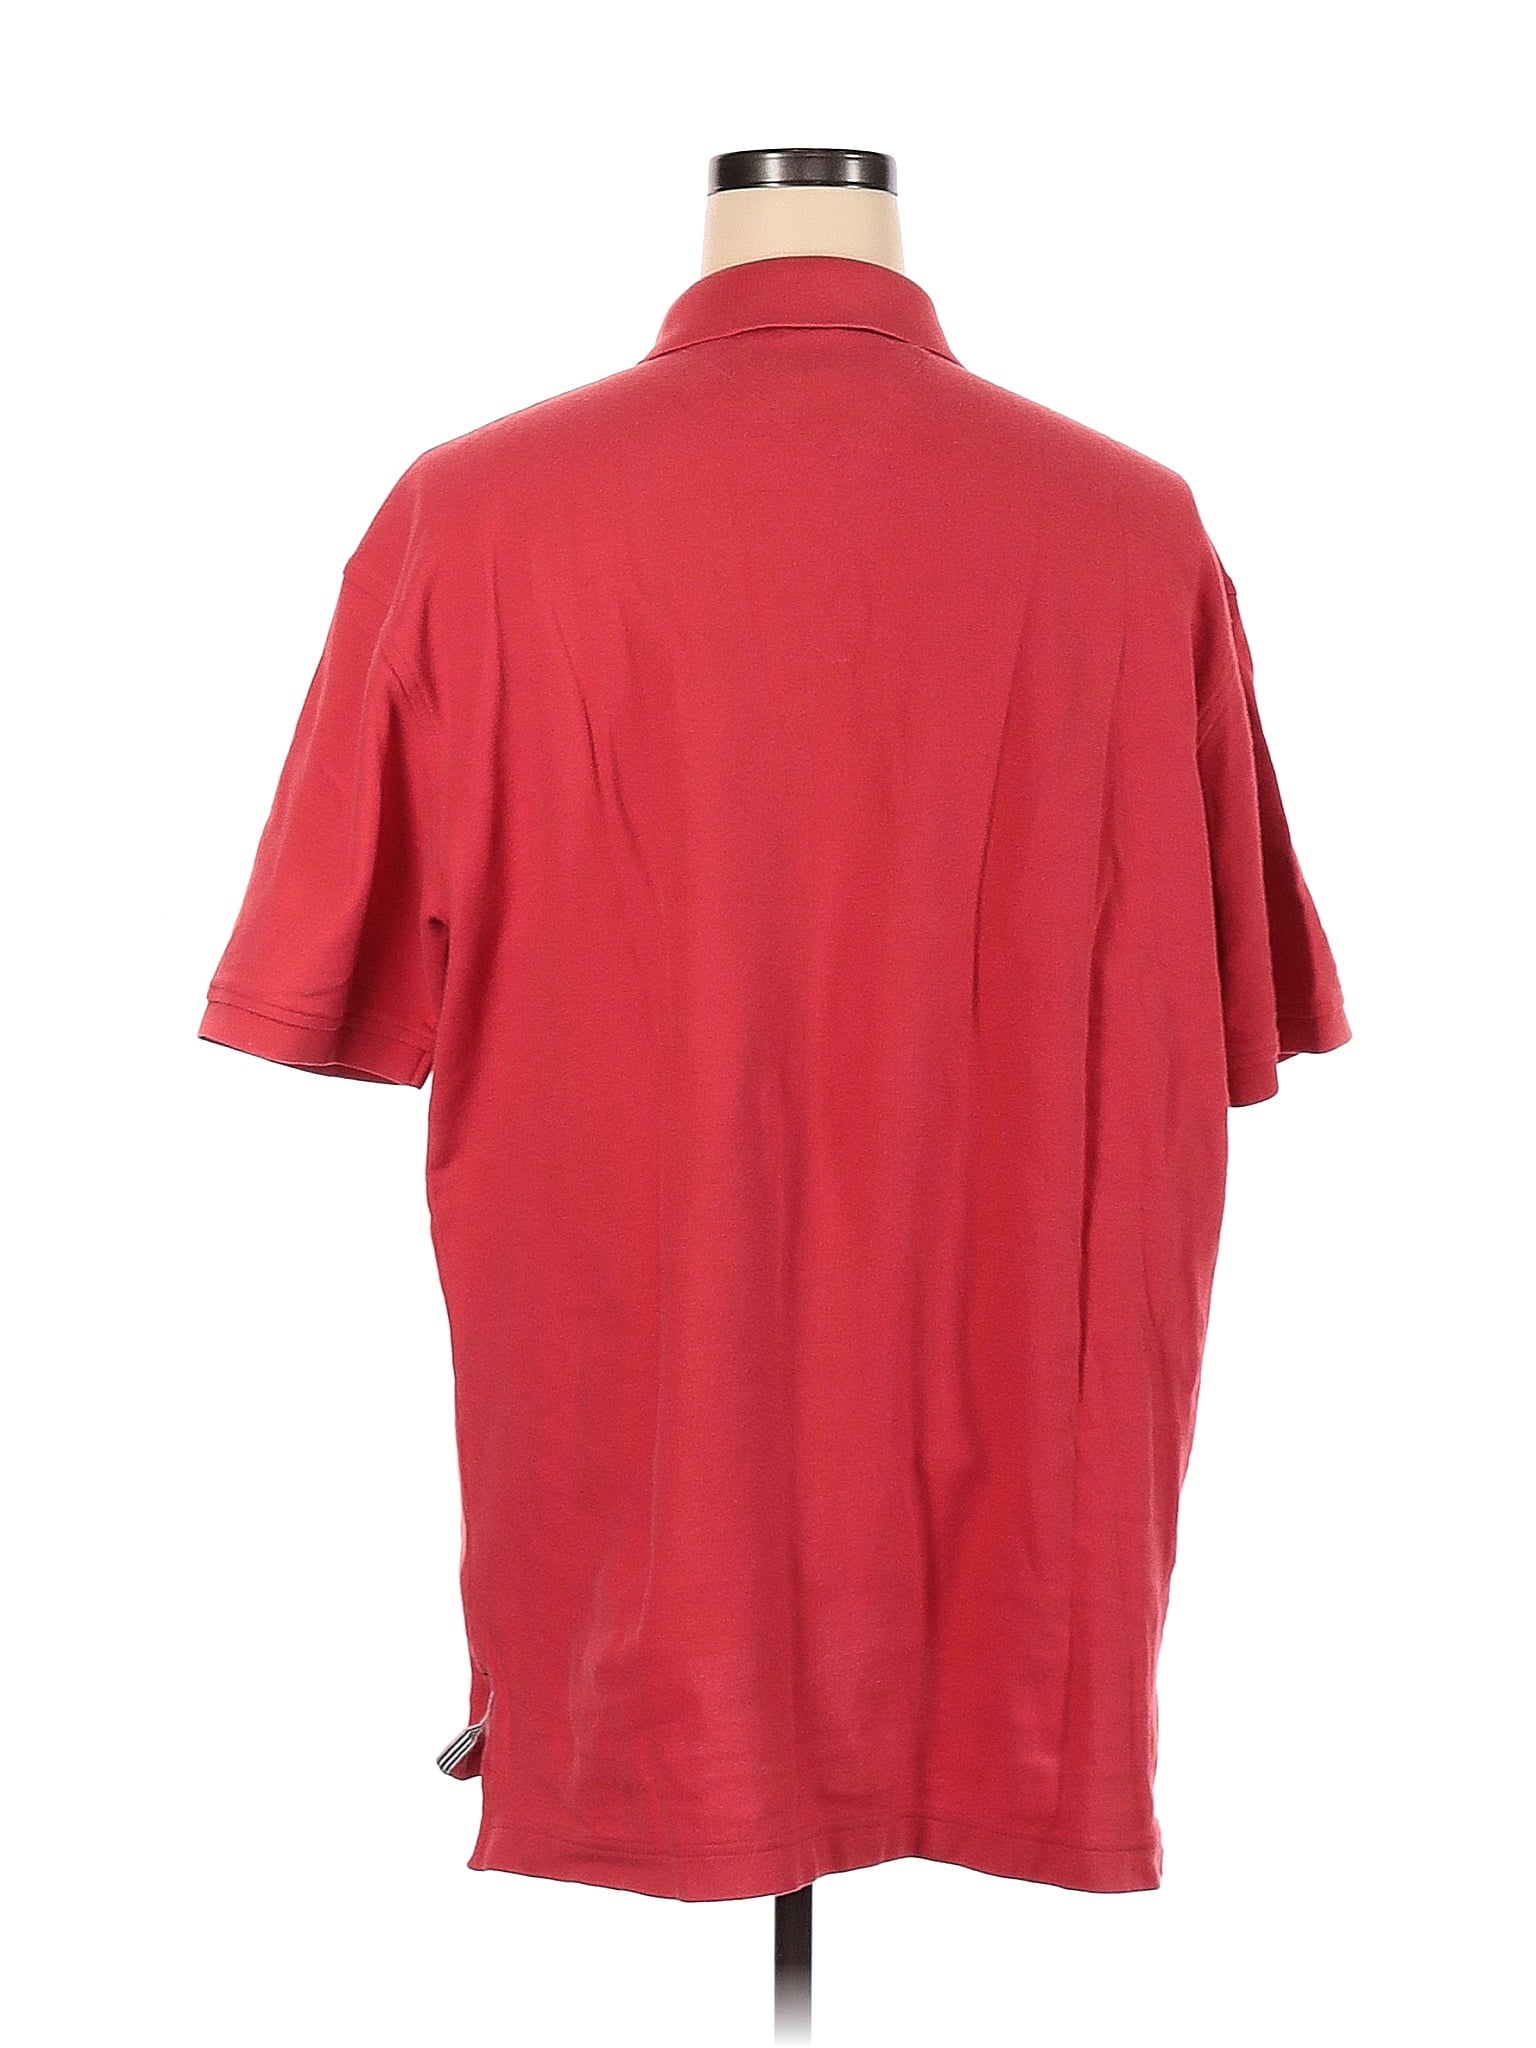 Polo Shirt size - XL